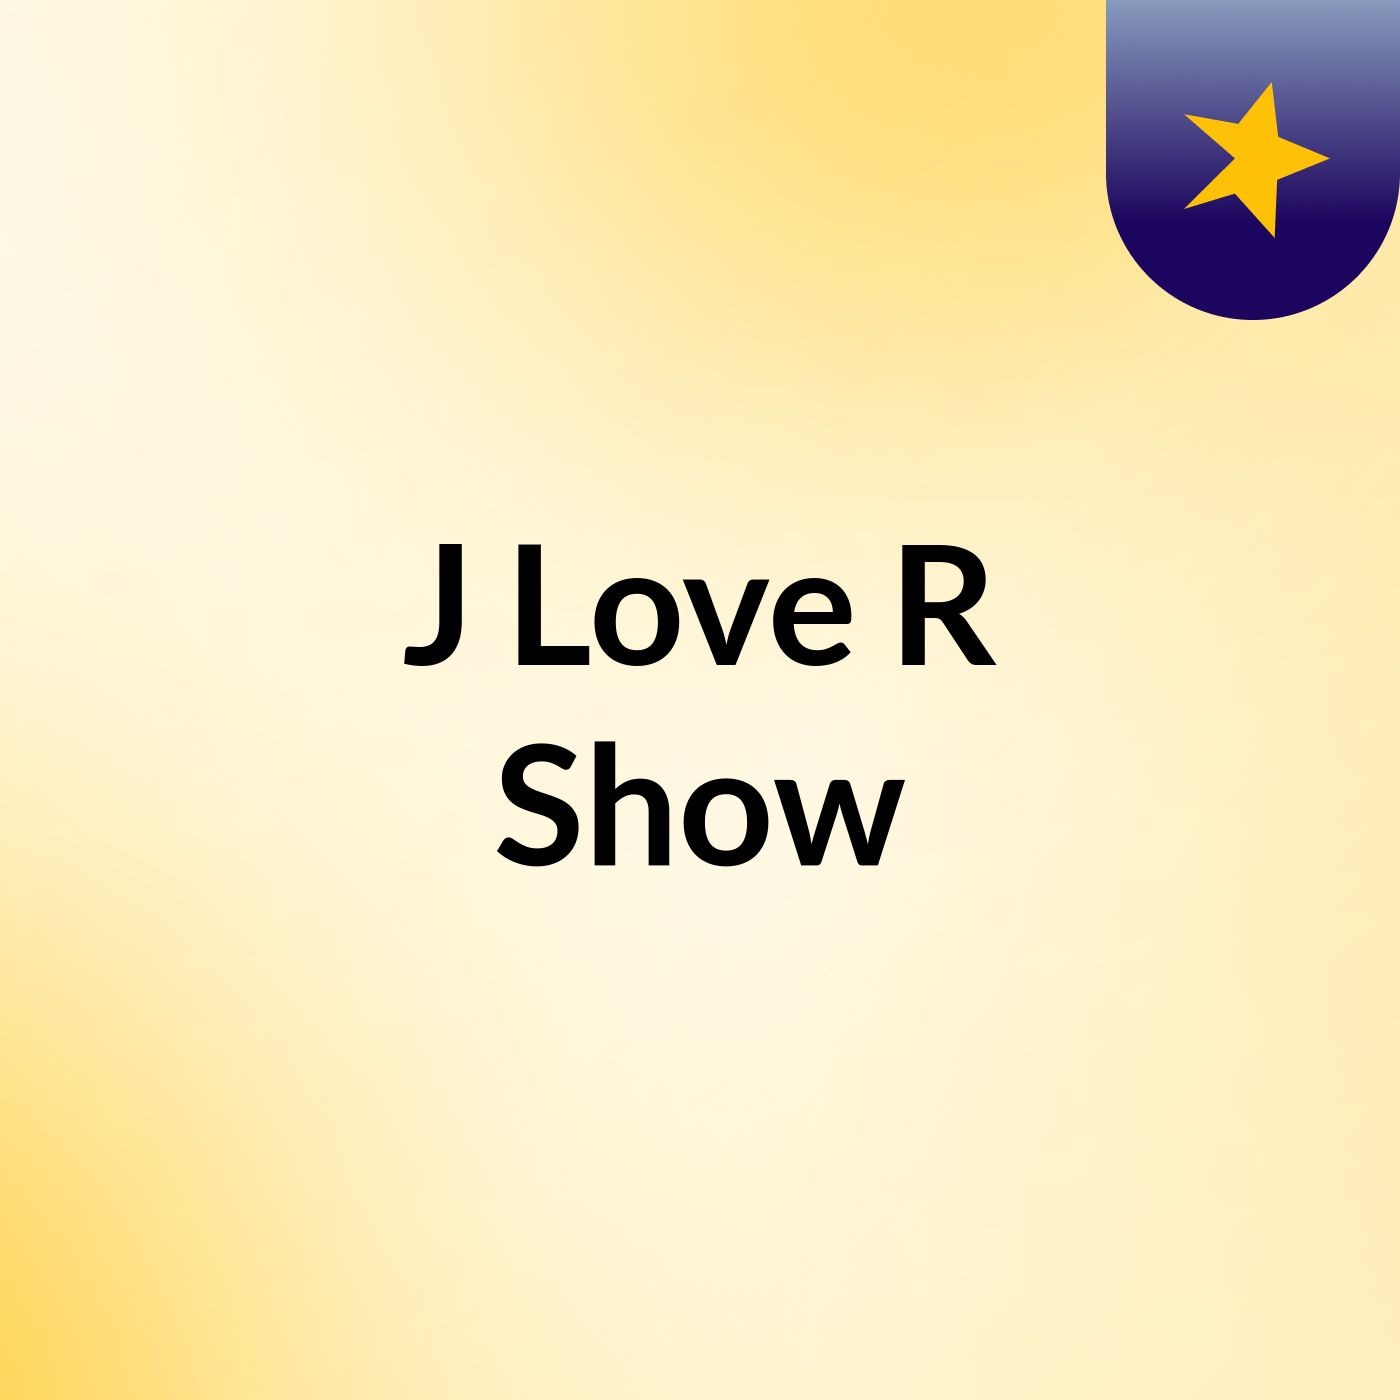 J Love R Show